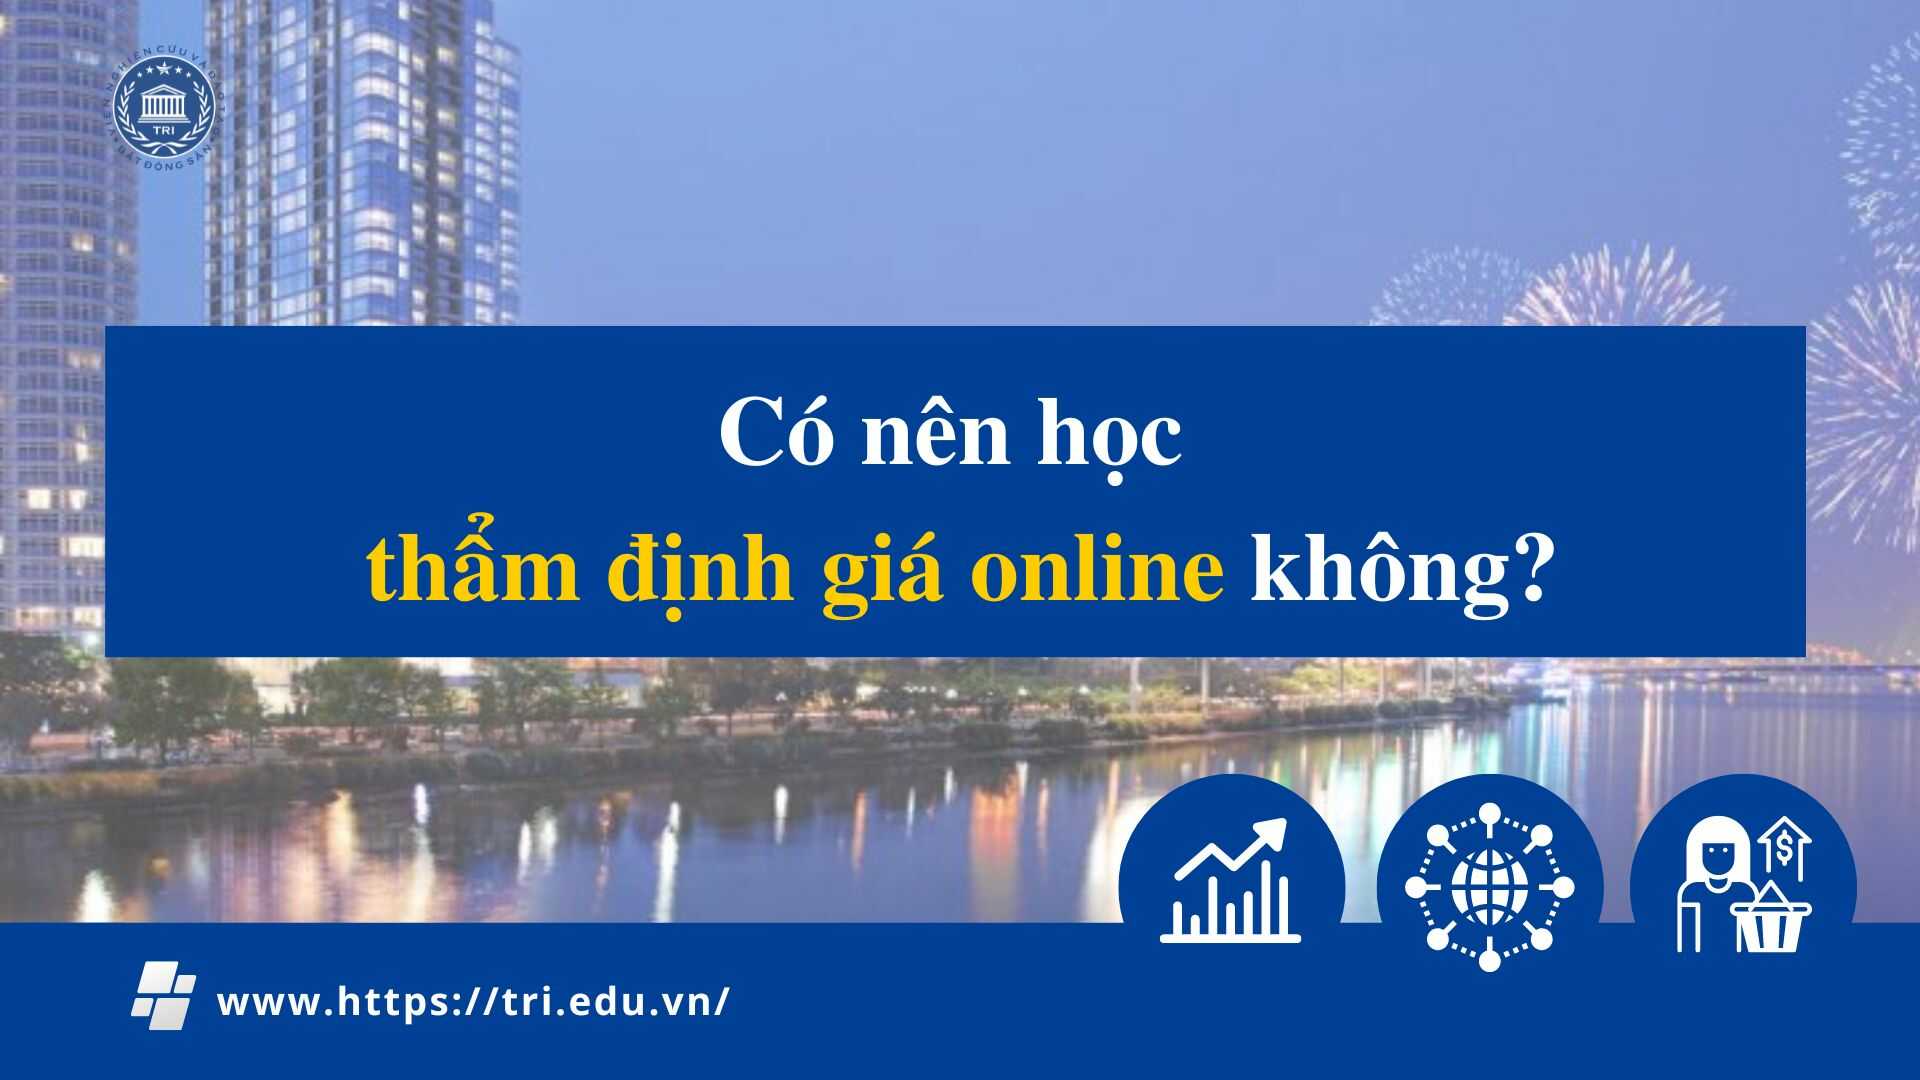 Tham Dinh Gia Online (1)